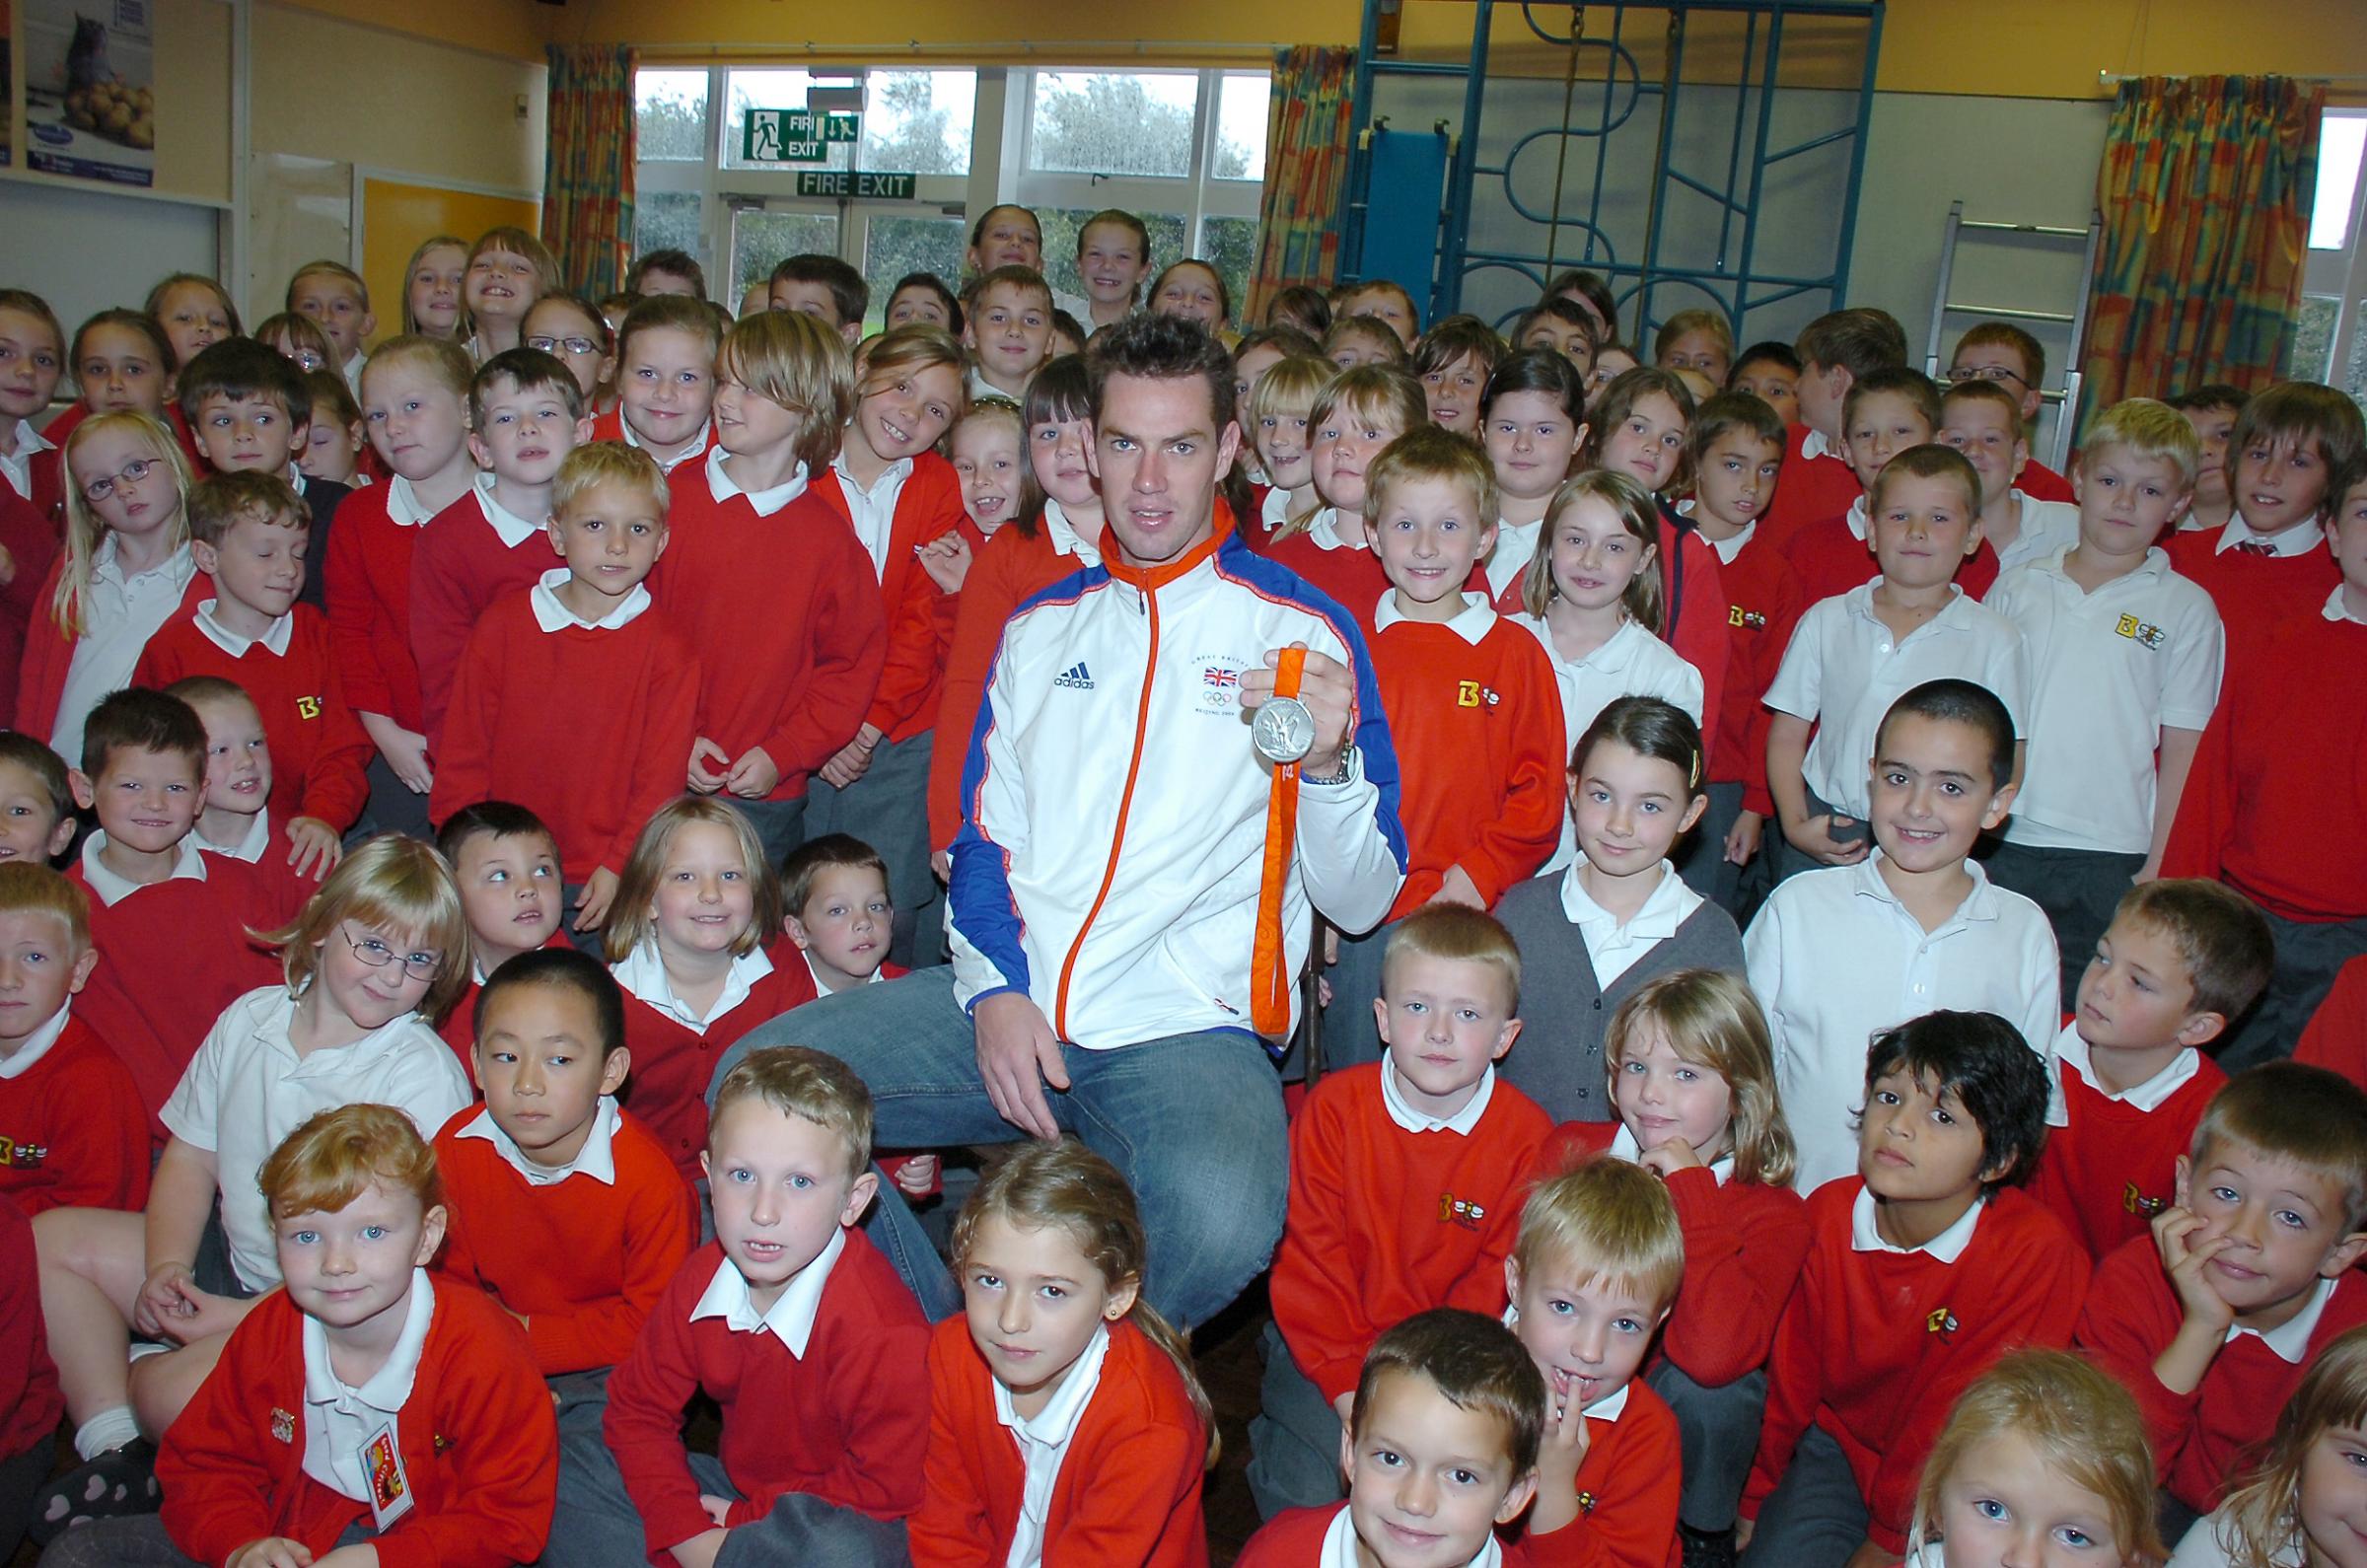 2008: Richard Egington shows schoolchildren the rowing silver medal he won at the Beijing Olympics